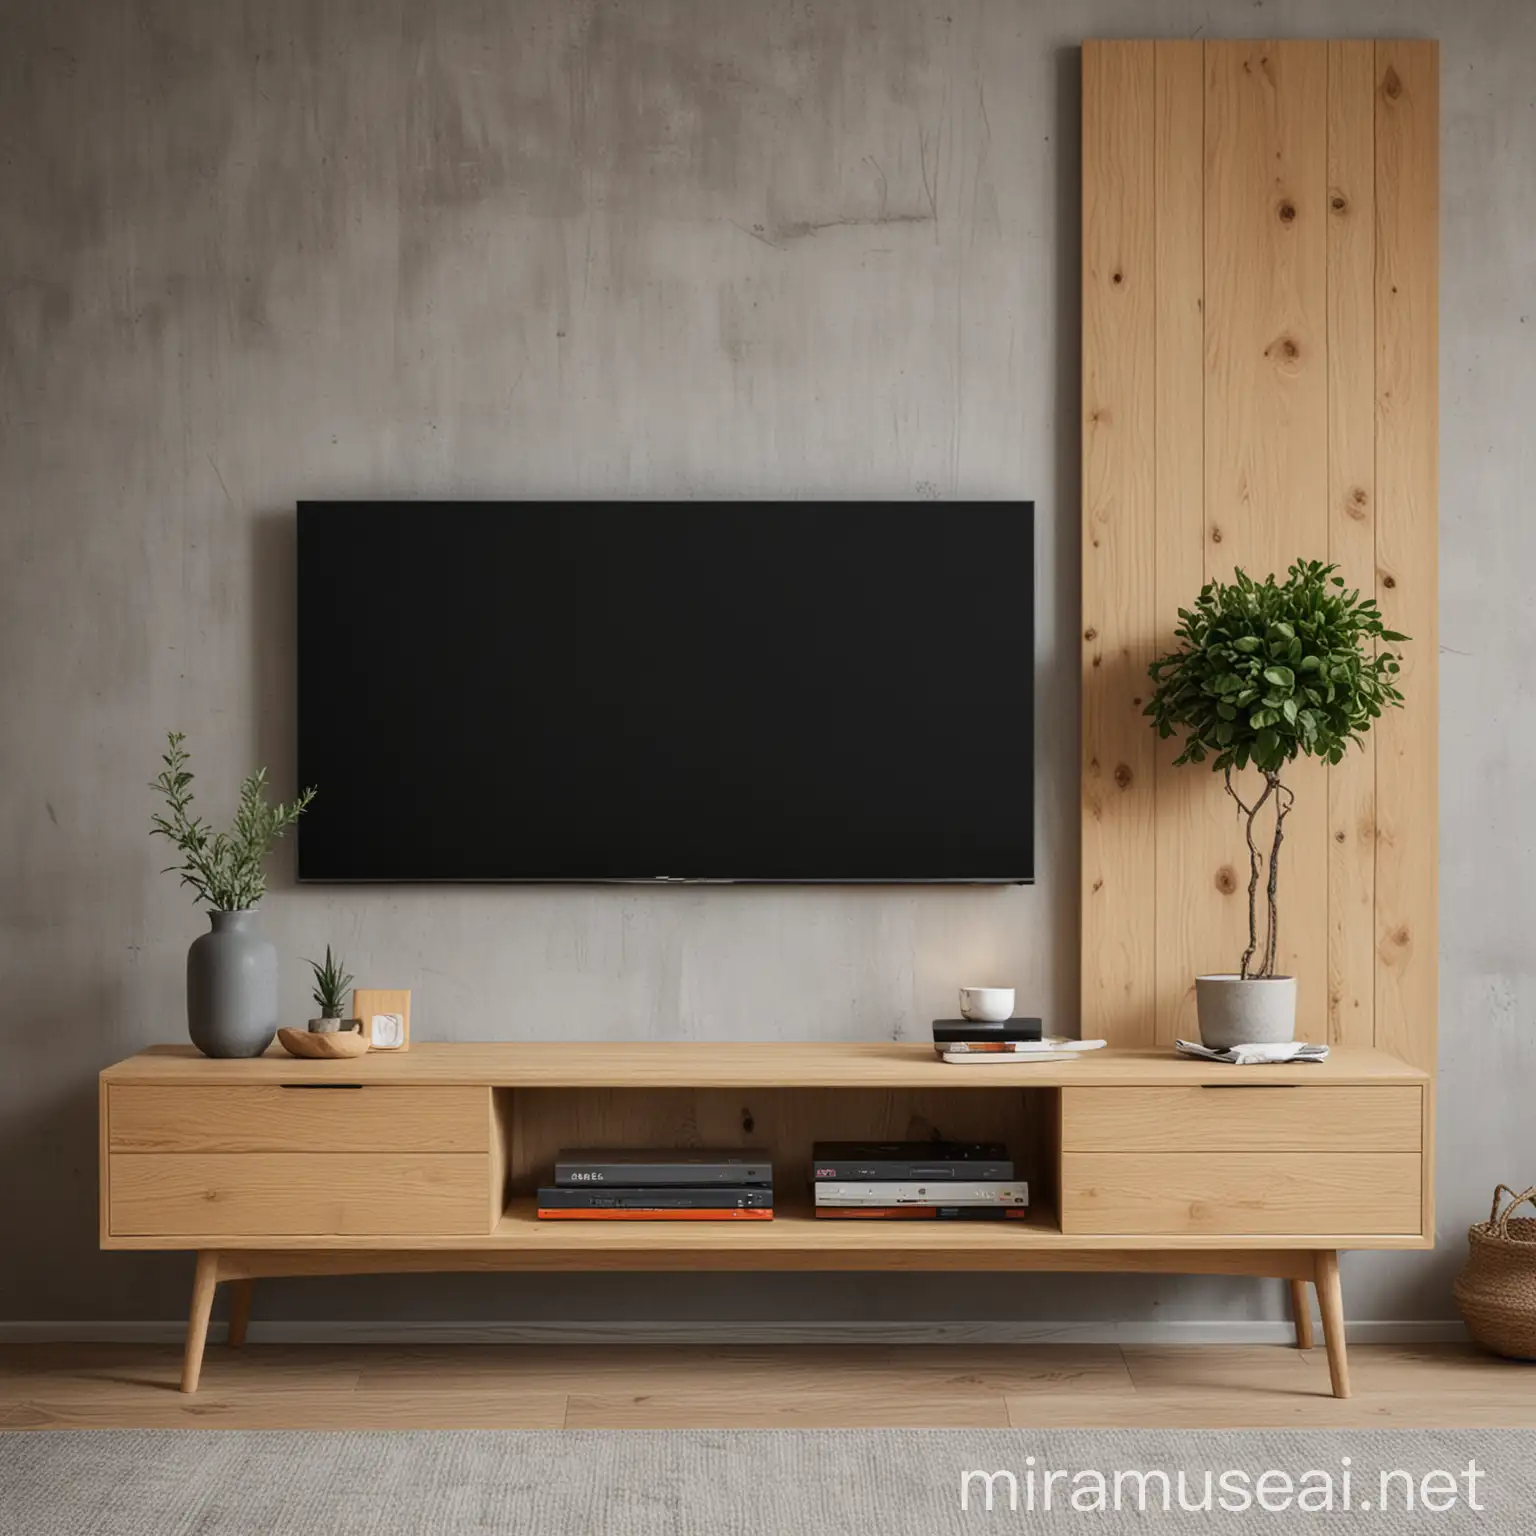 Minimalist Luxury TV Wall with Oak Board and LED Lights Scandinavian Decor